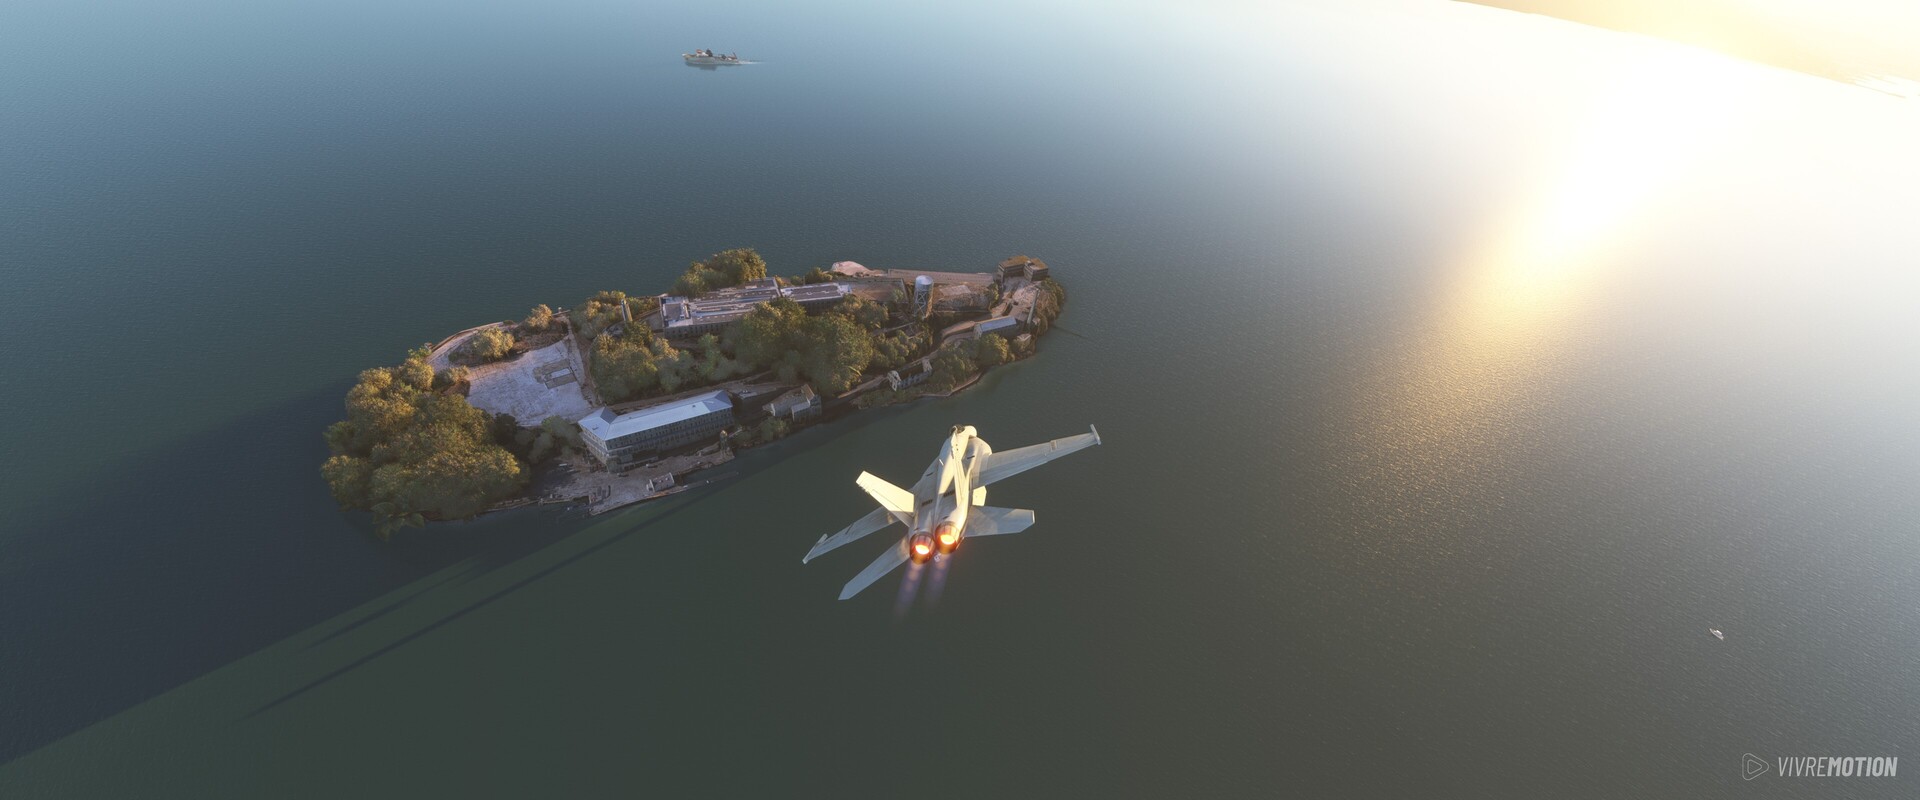 San Francisco Alcatraz - Boeing F/A-18 Super Hornet - Microsoft Flight Simulator - VIVRE-MOTION